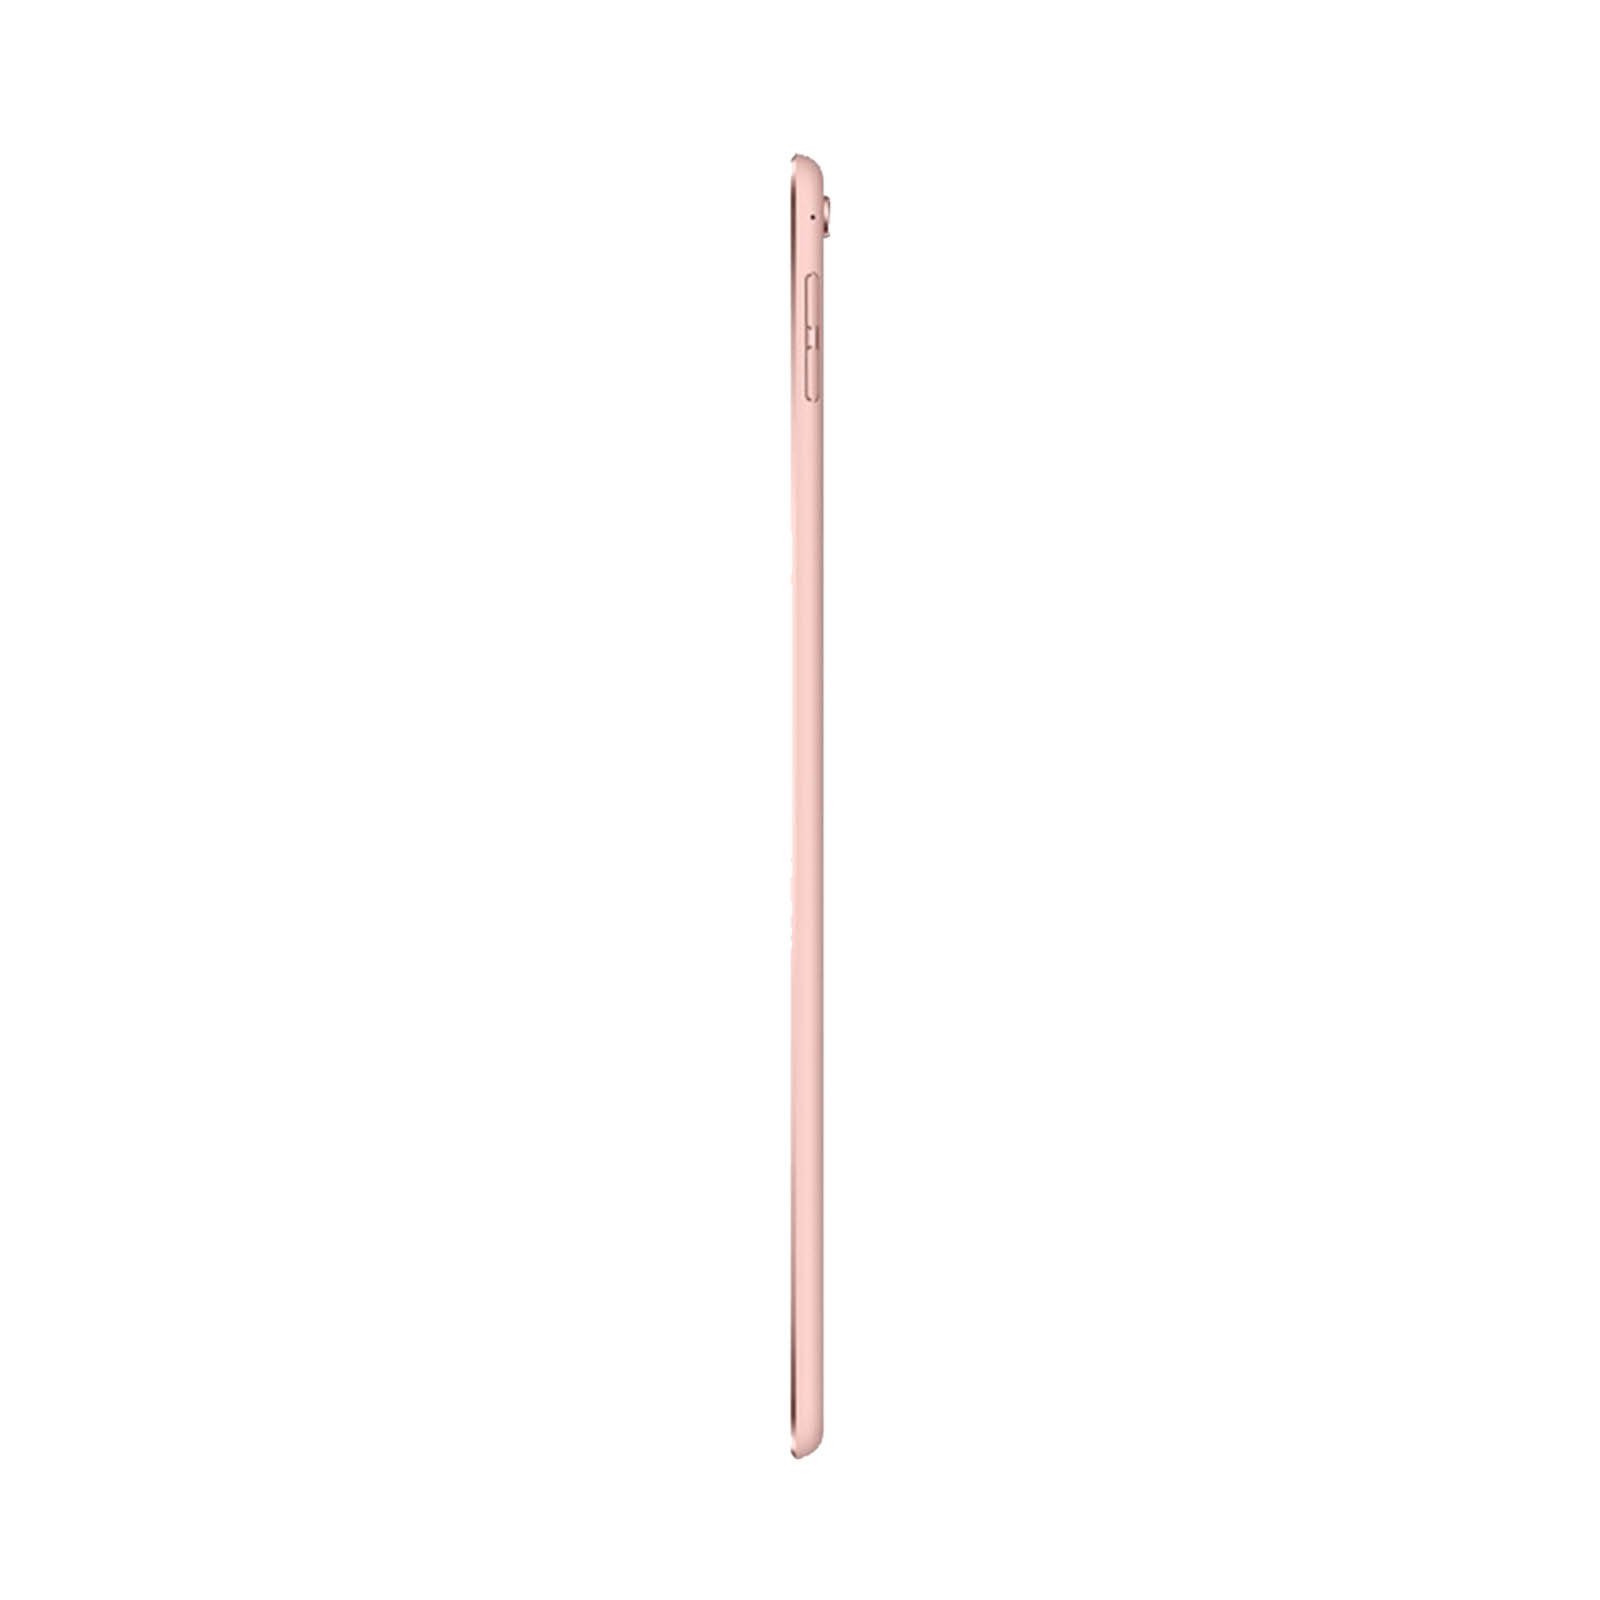 iPad Pro 9.7 Inch 128GB Rose Gold Very Good - WiFi